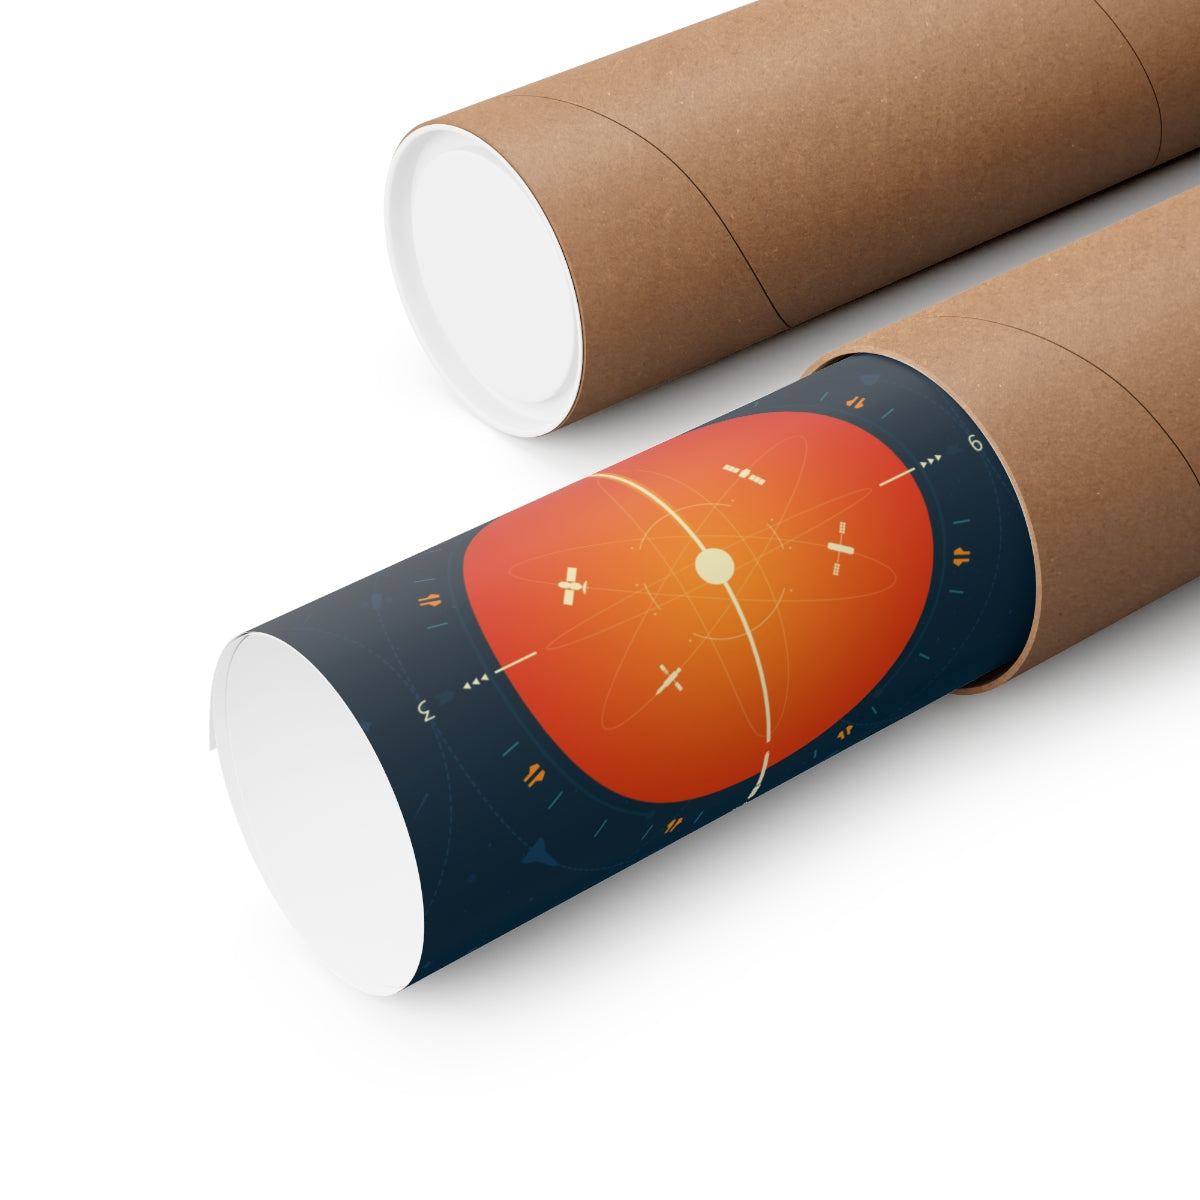 NASA - Visions of the Future : Atomic Clock (Orange) Poster